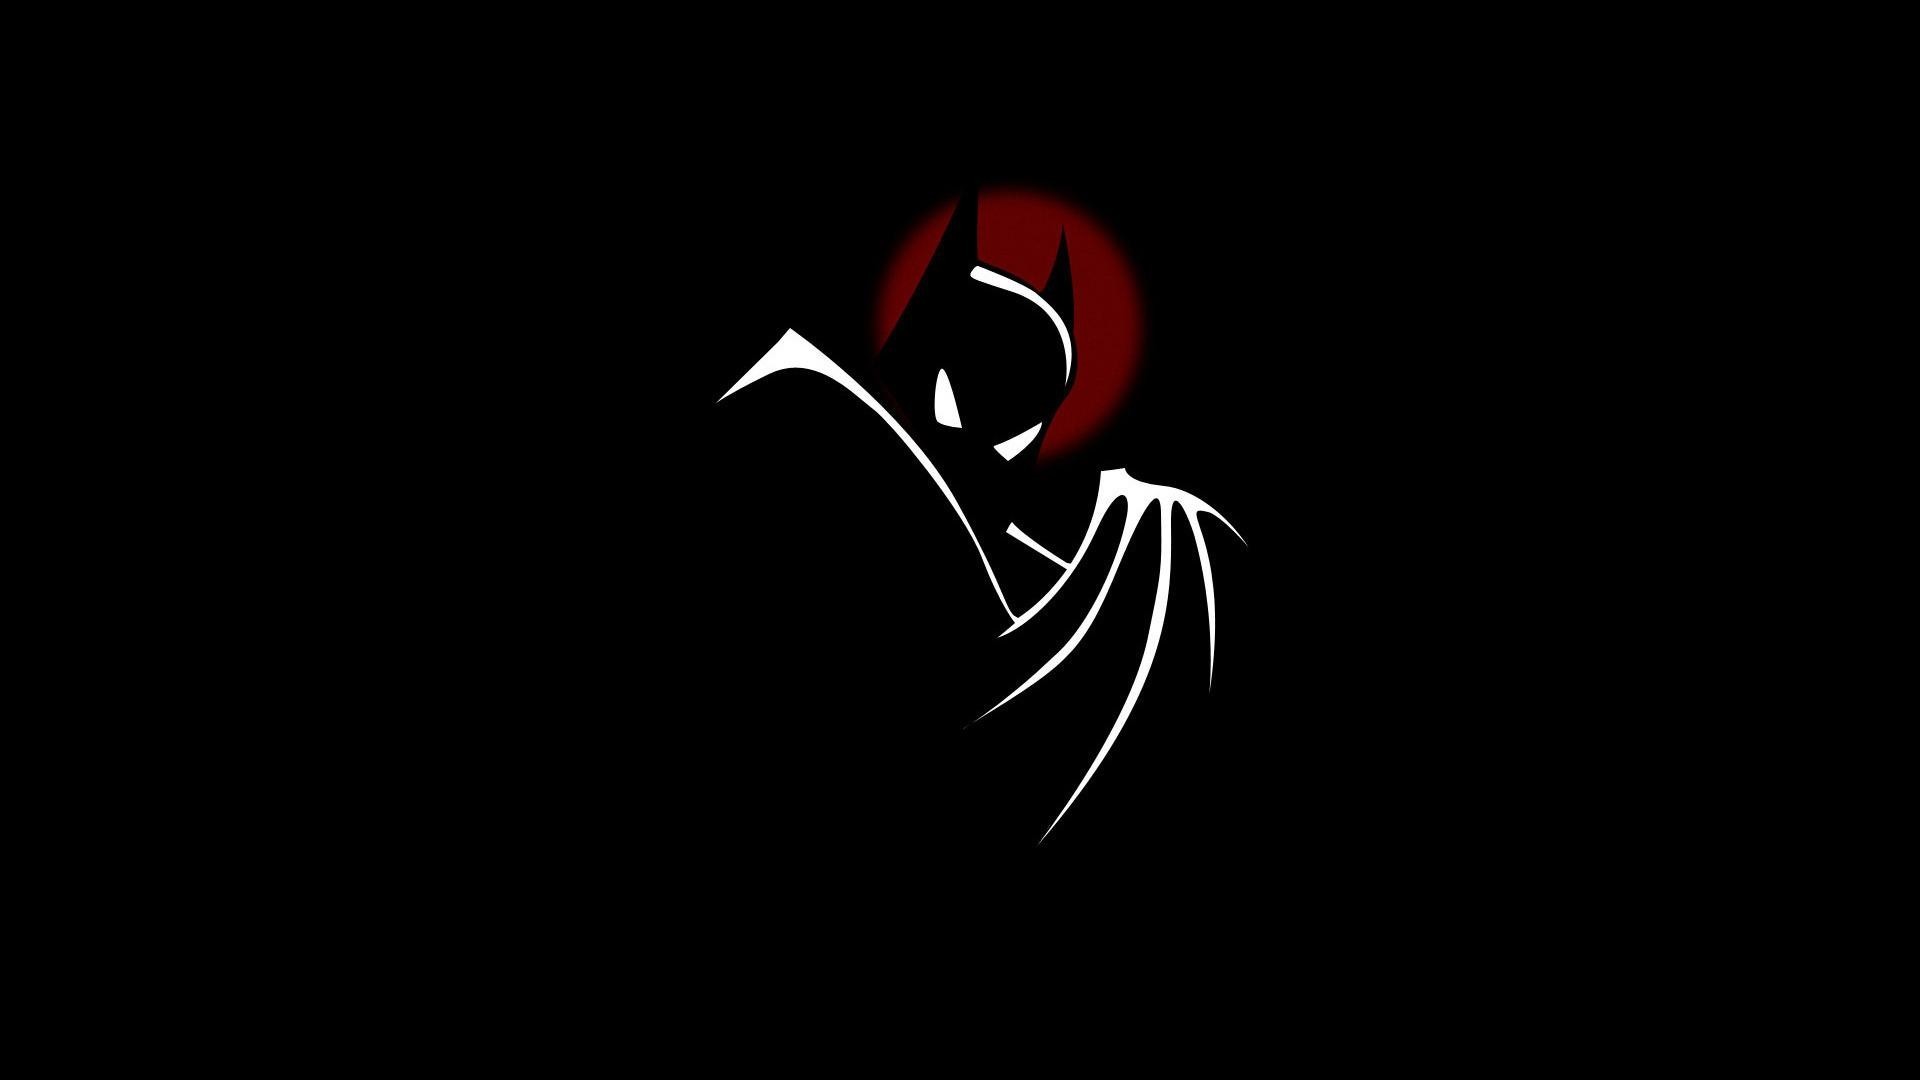 Batman beyond hd wallpapers 1080p pixlubs.com